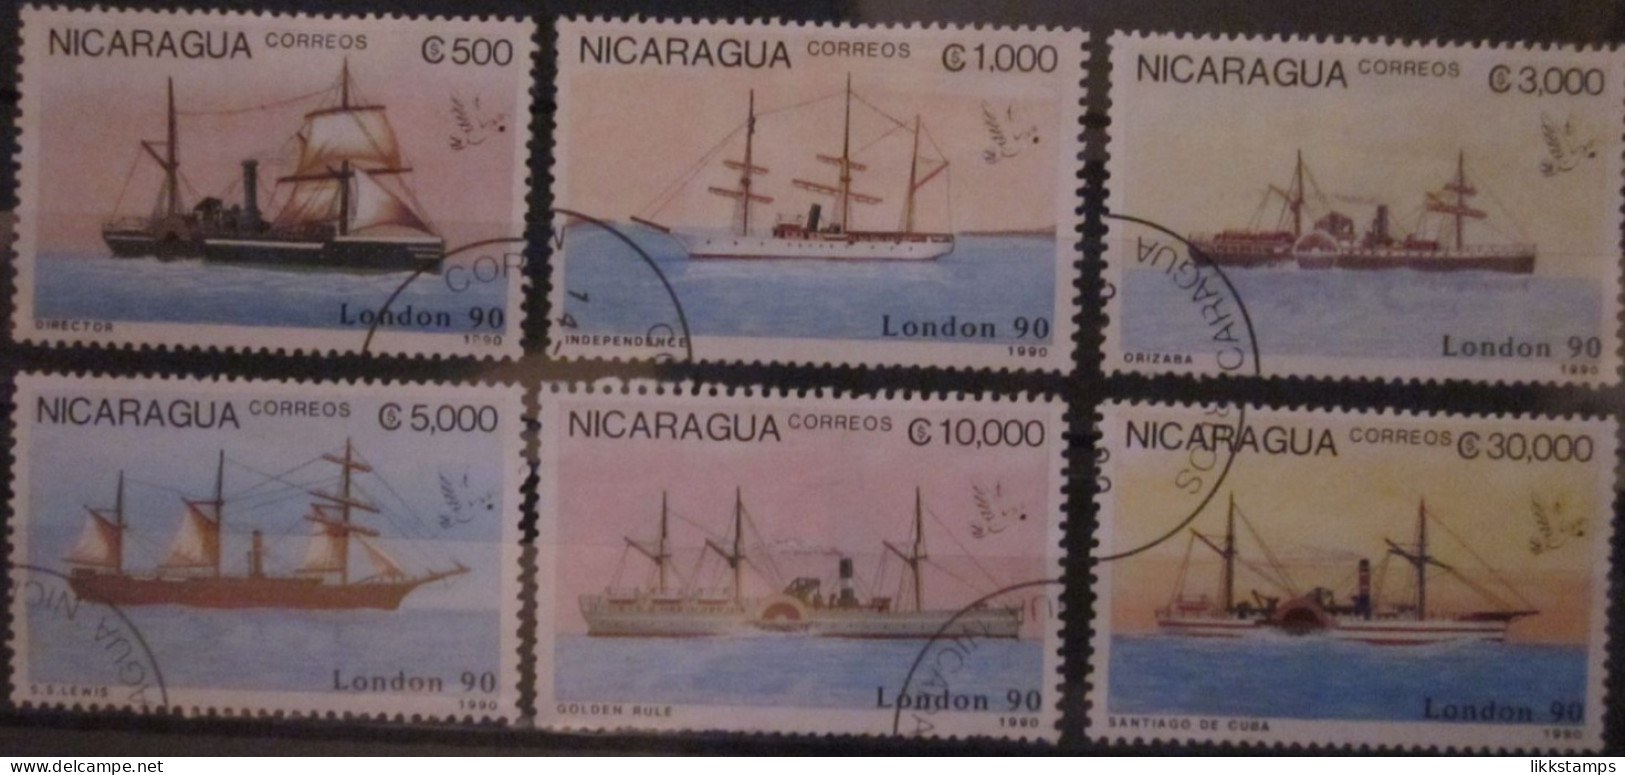 NICARAGUA ~ 3rd APRIL 1990 ~ "STAMPWORLD LONDON '90" ~ OLD STEAM SHIPS ~ VFU #03510 - Nicaragua